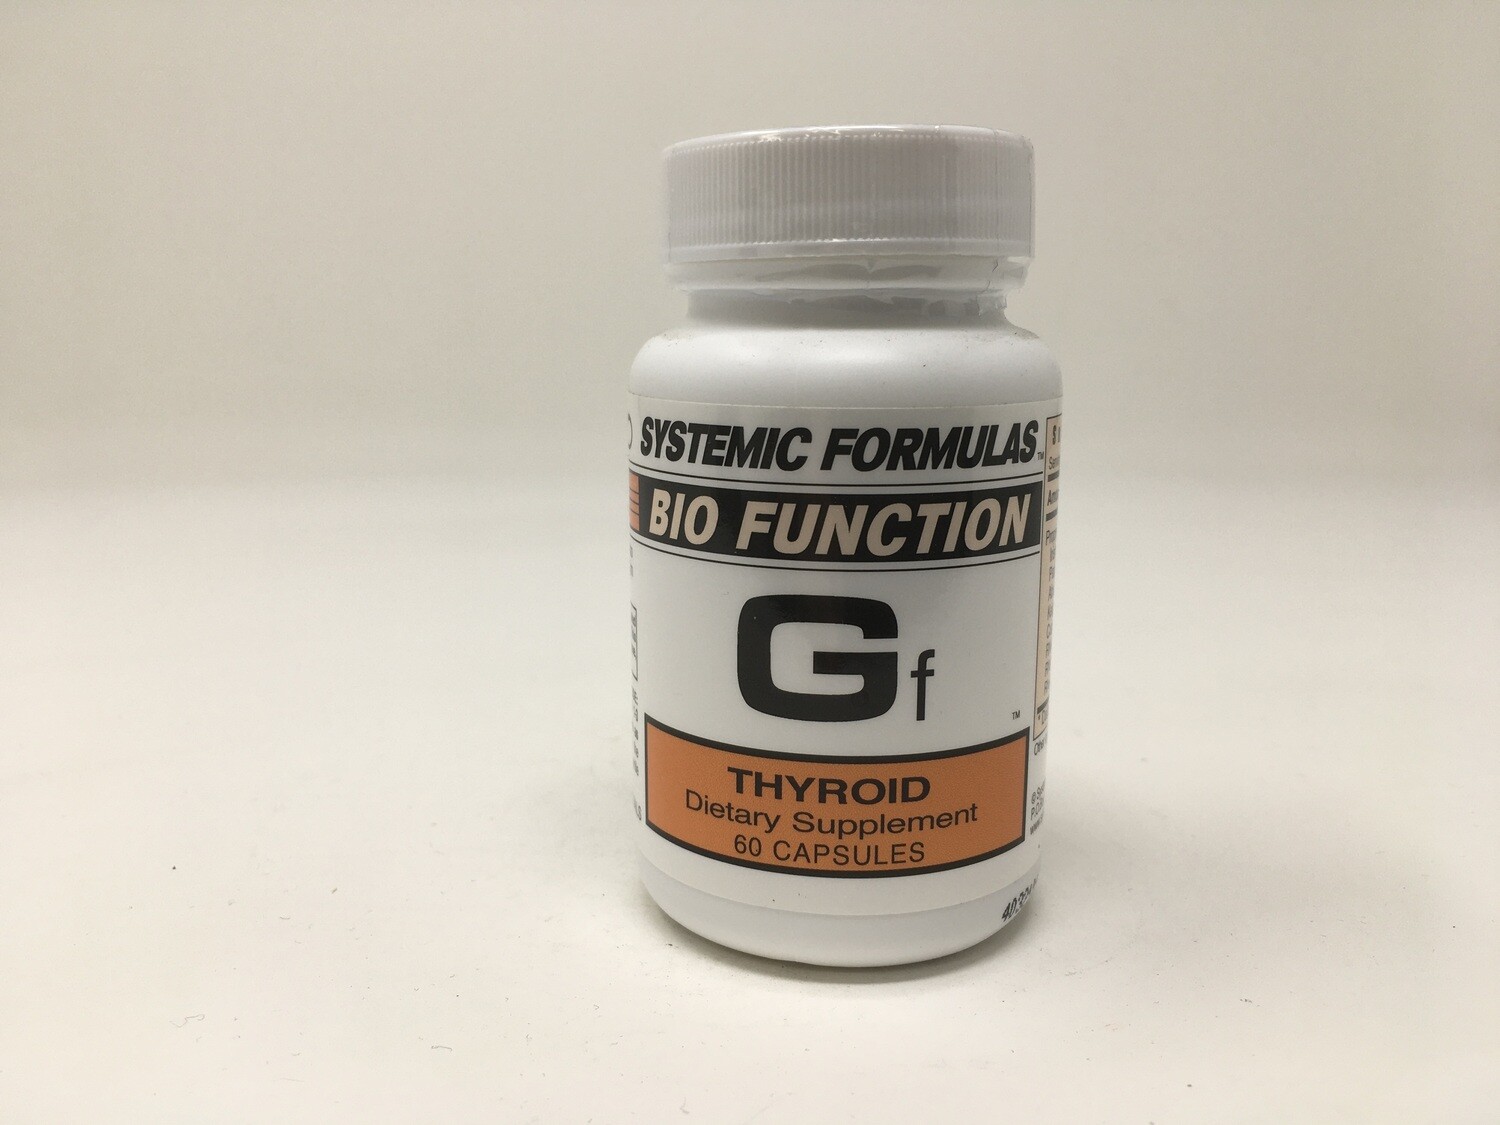 Gf Thyroid 60 capsules(Systemic Formulas)